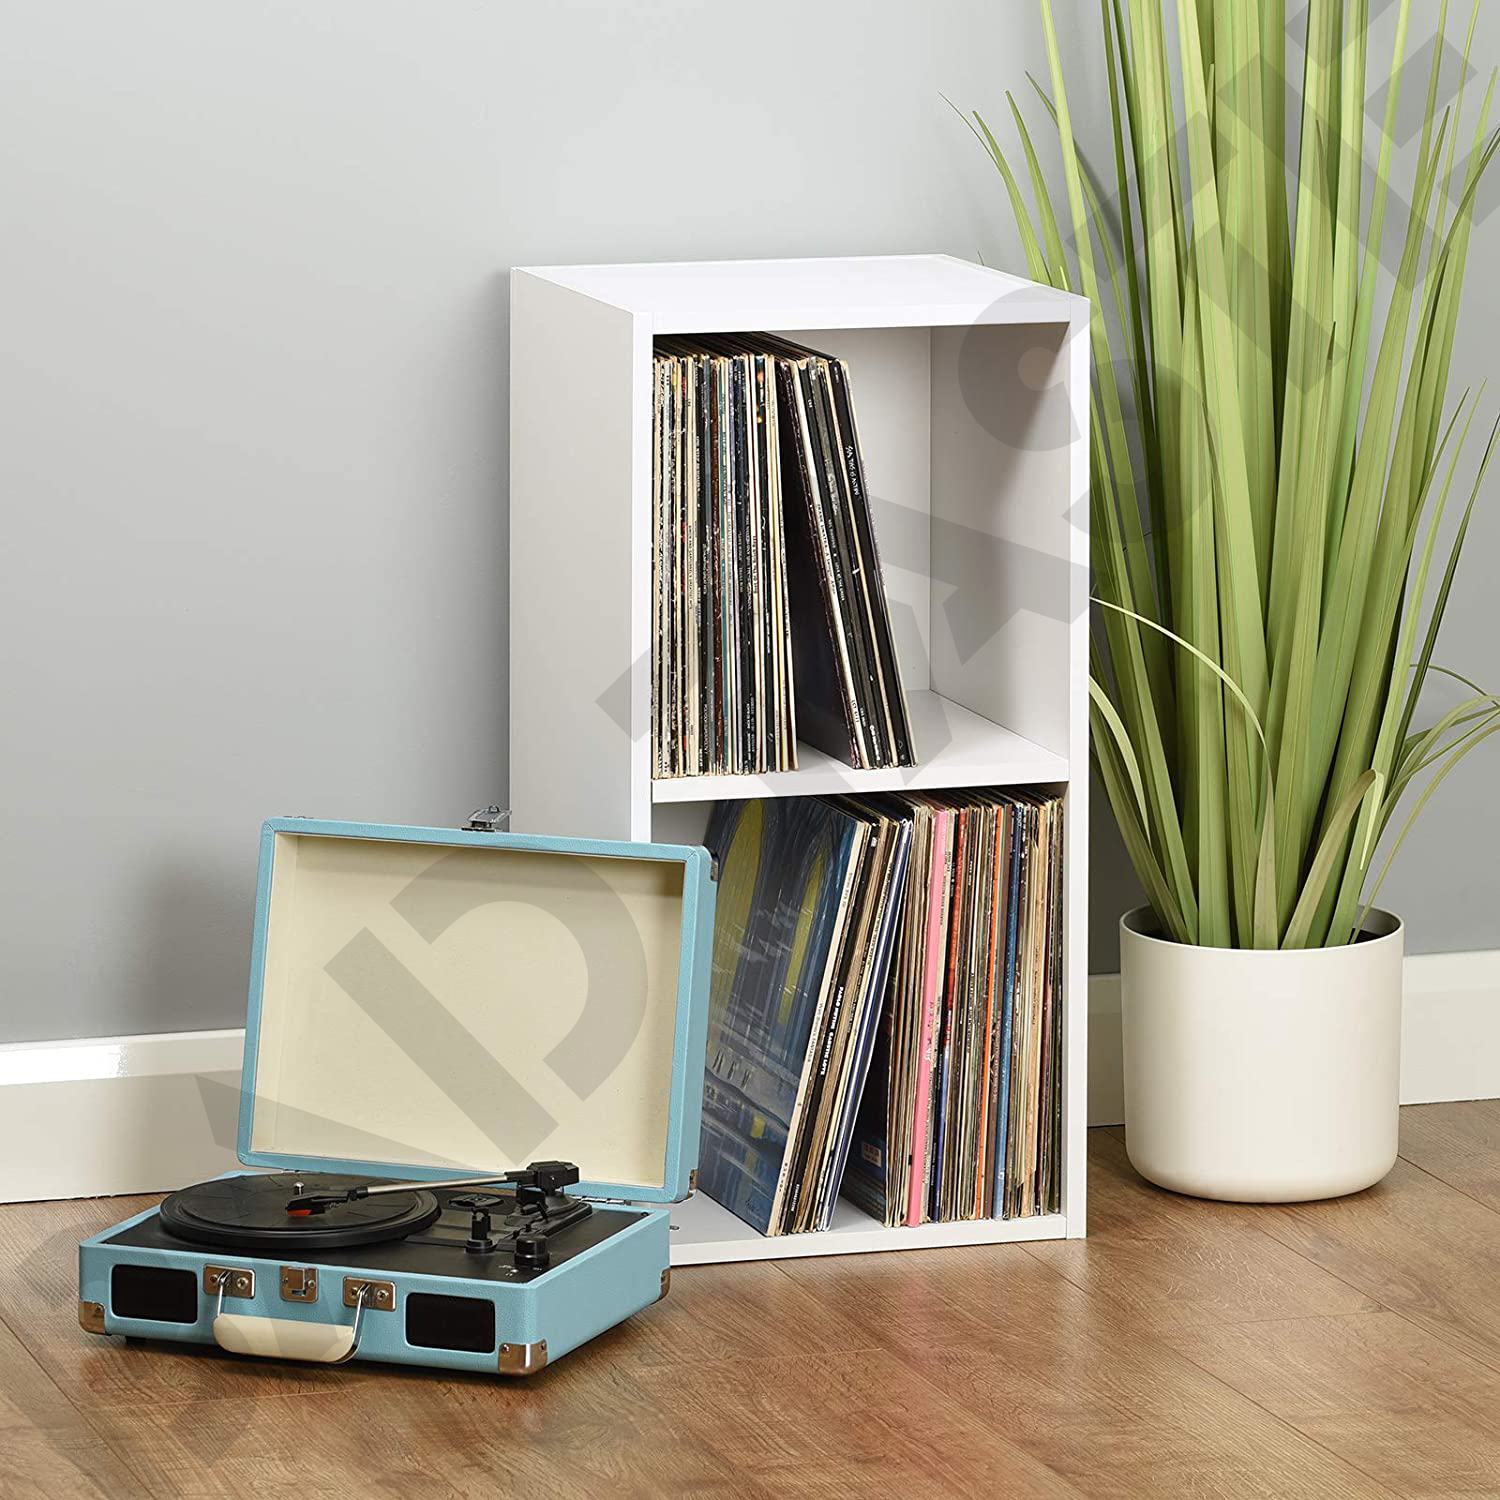 BAD TASTE Concept Store - Muebles para discos de vinilos - Muebles para  almacenar discos de vinilo - Coleccionistas de discos de vinilo – Bad Taste  Concept Store